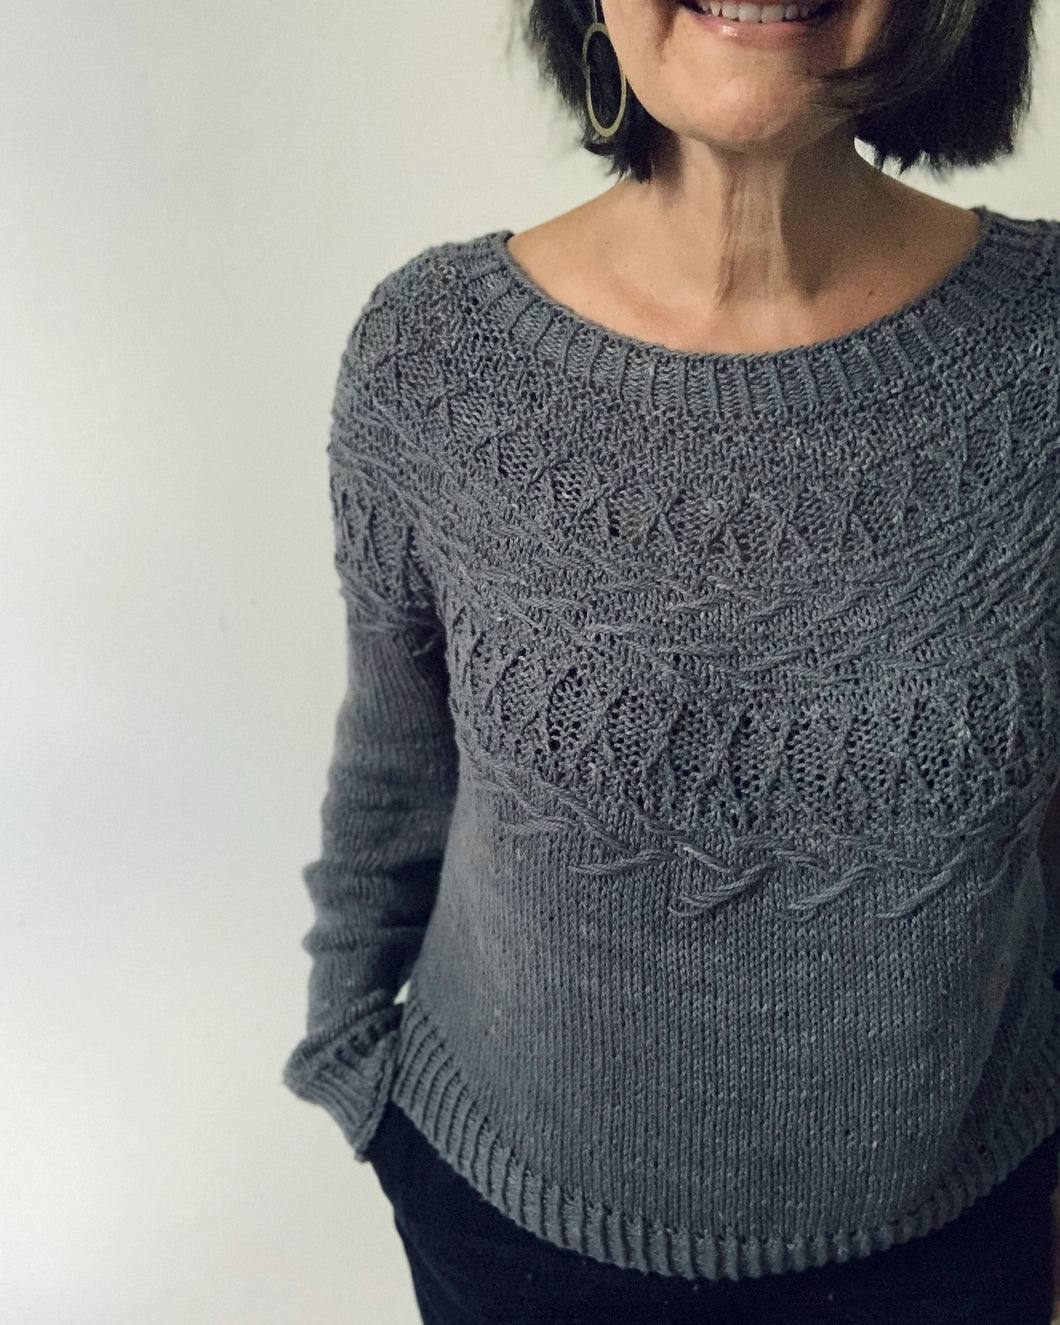 Oksa Sweater Pattern by Caitlin Hunter - Hard copy and PDF